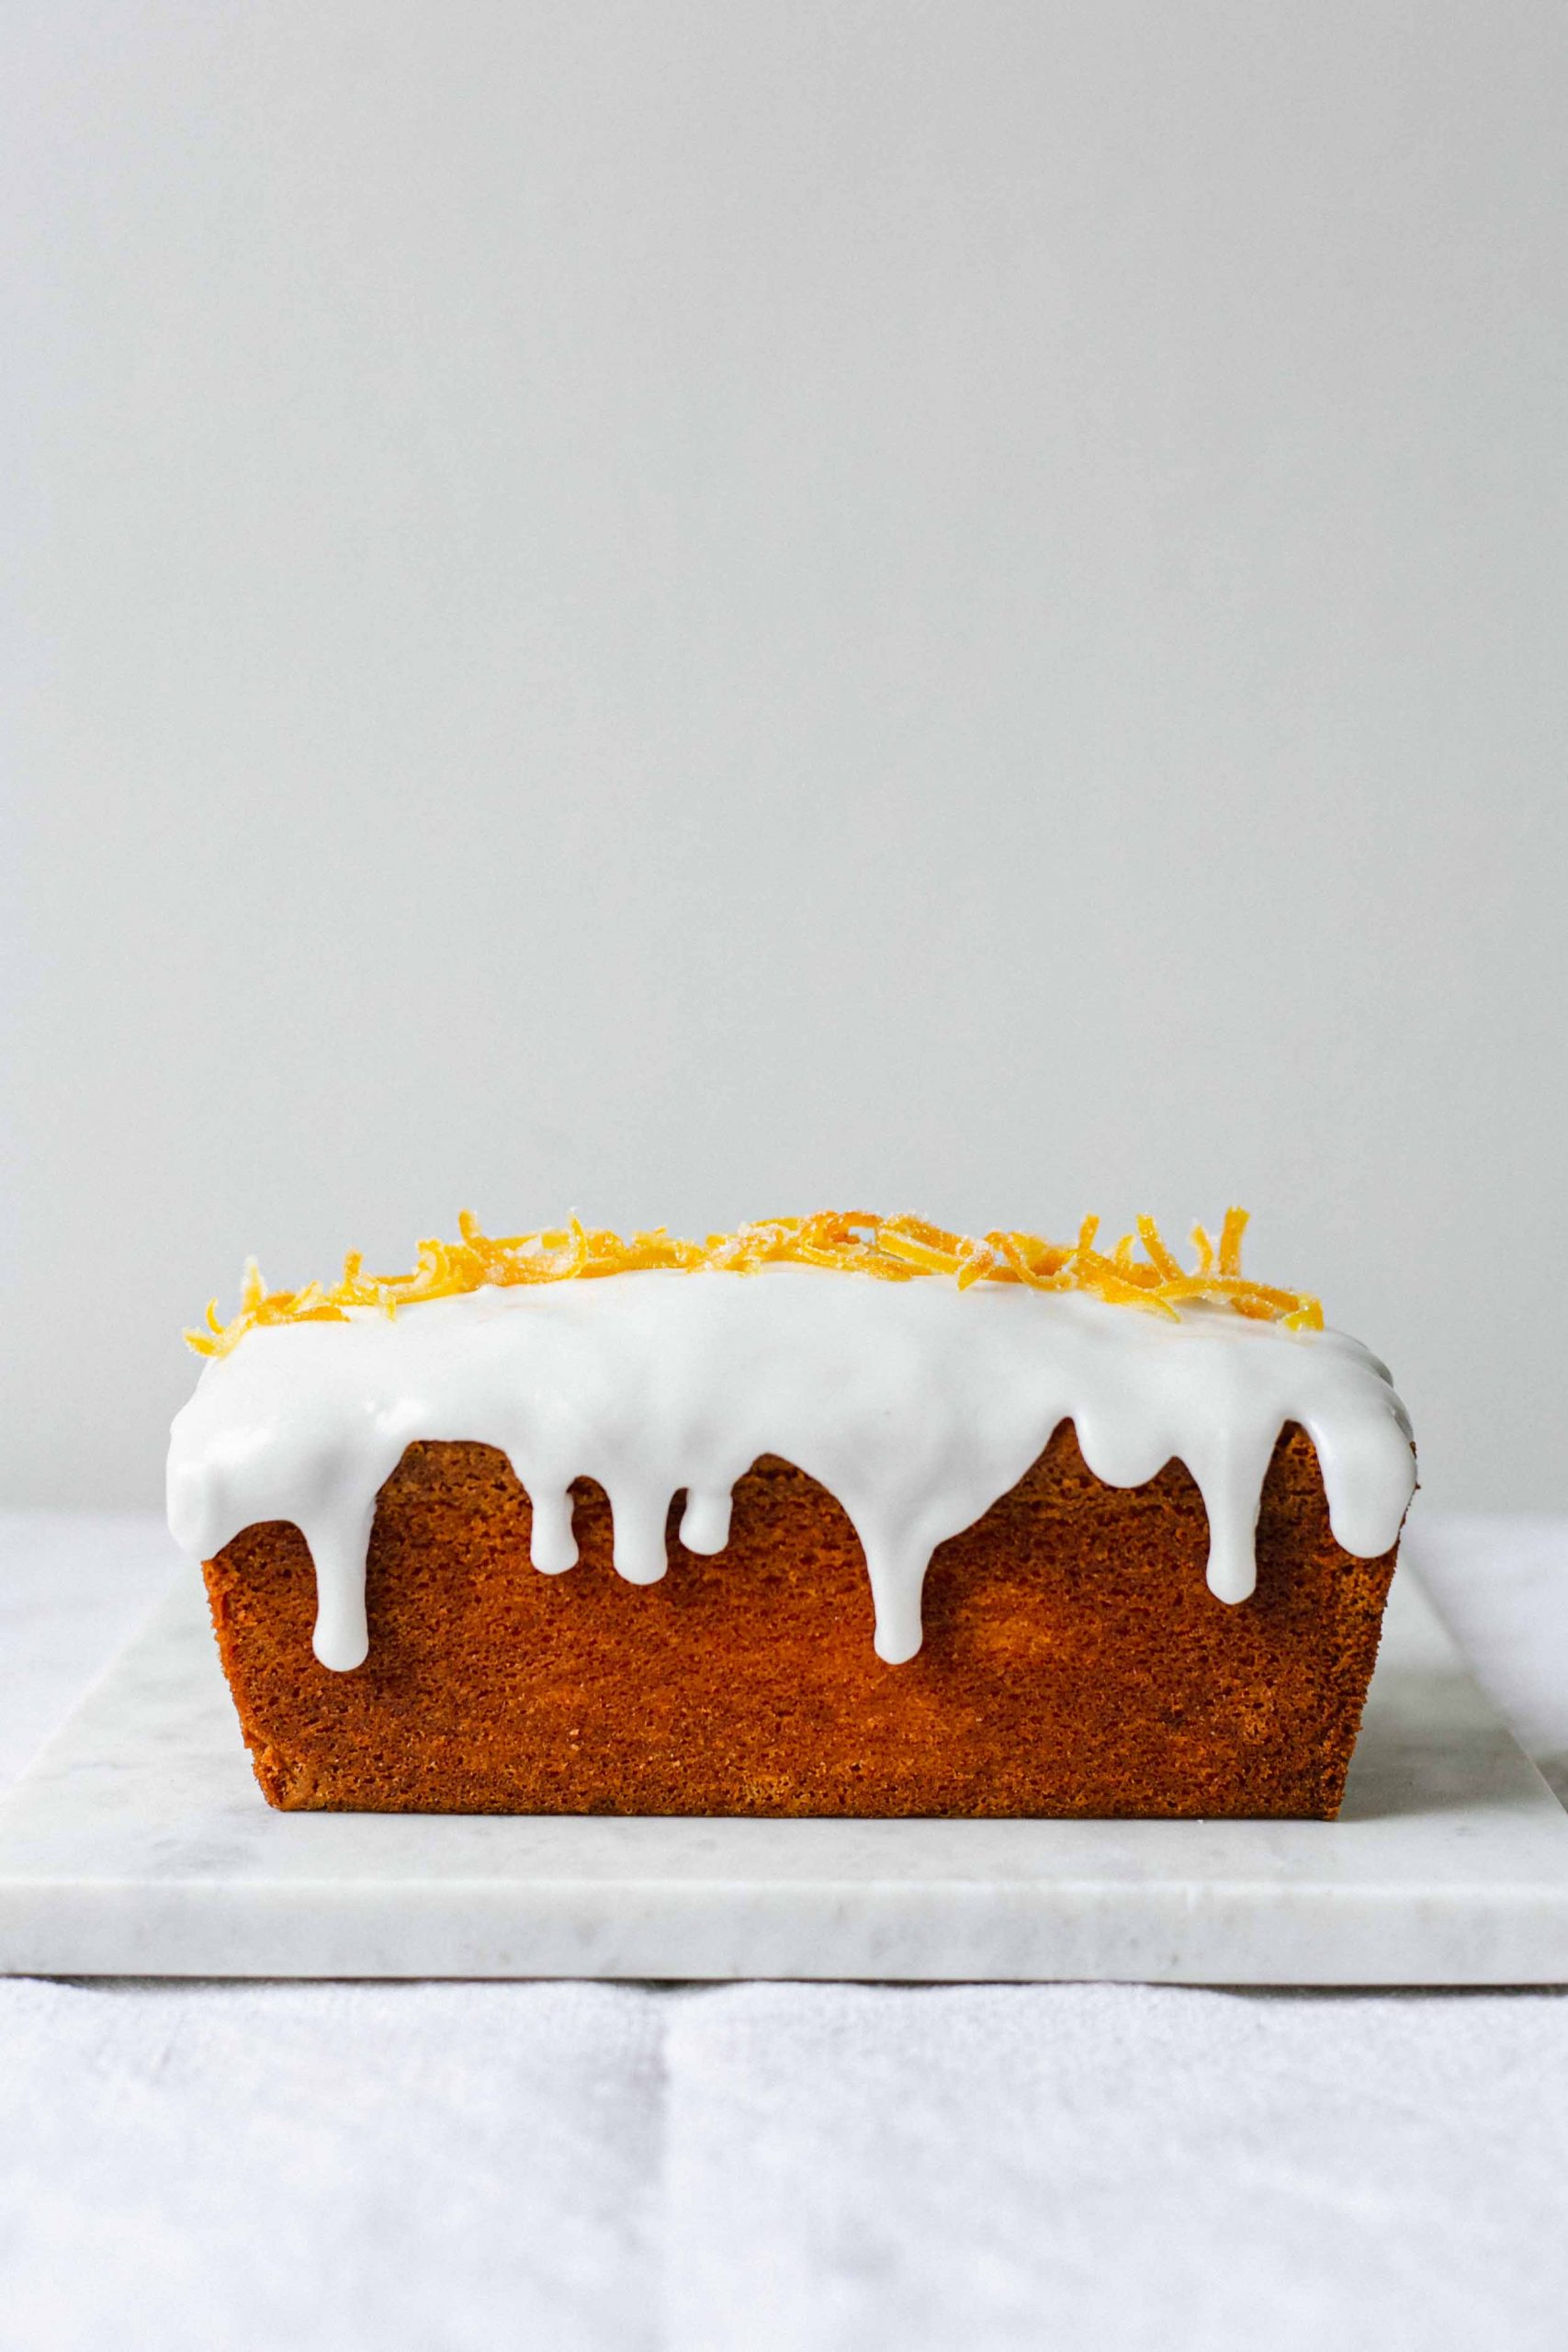 Low FODMAP lemon drizzle loaf cake side on